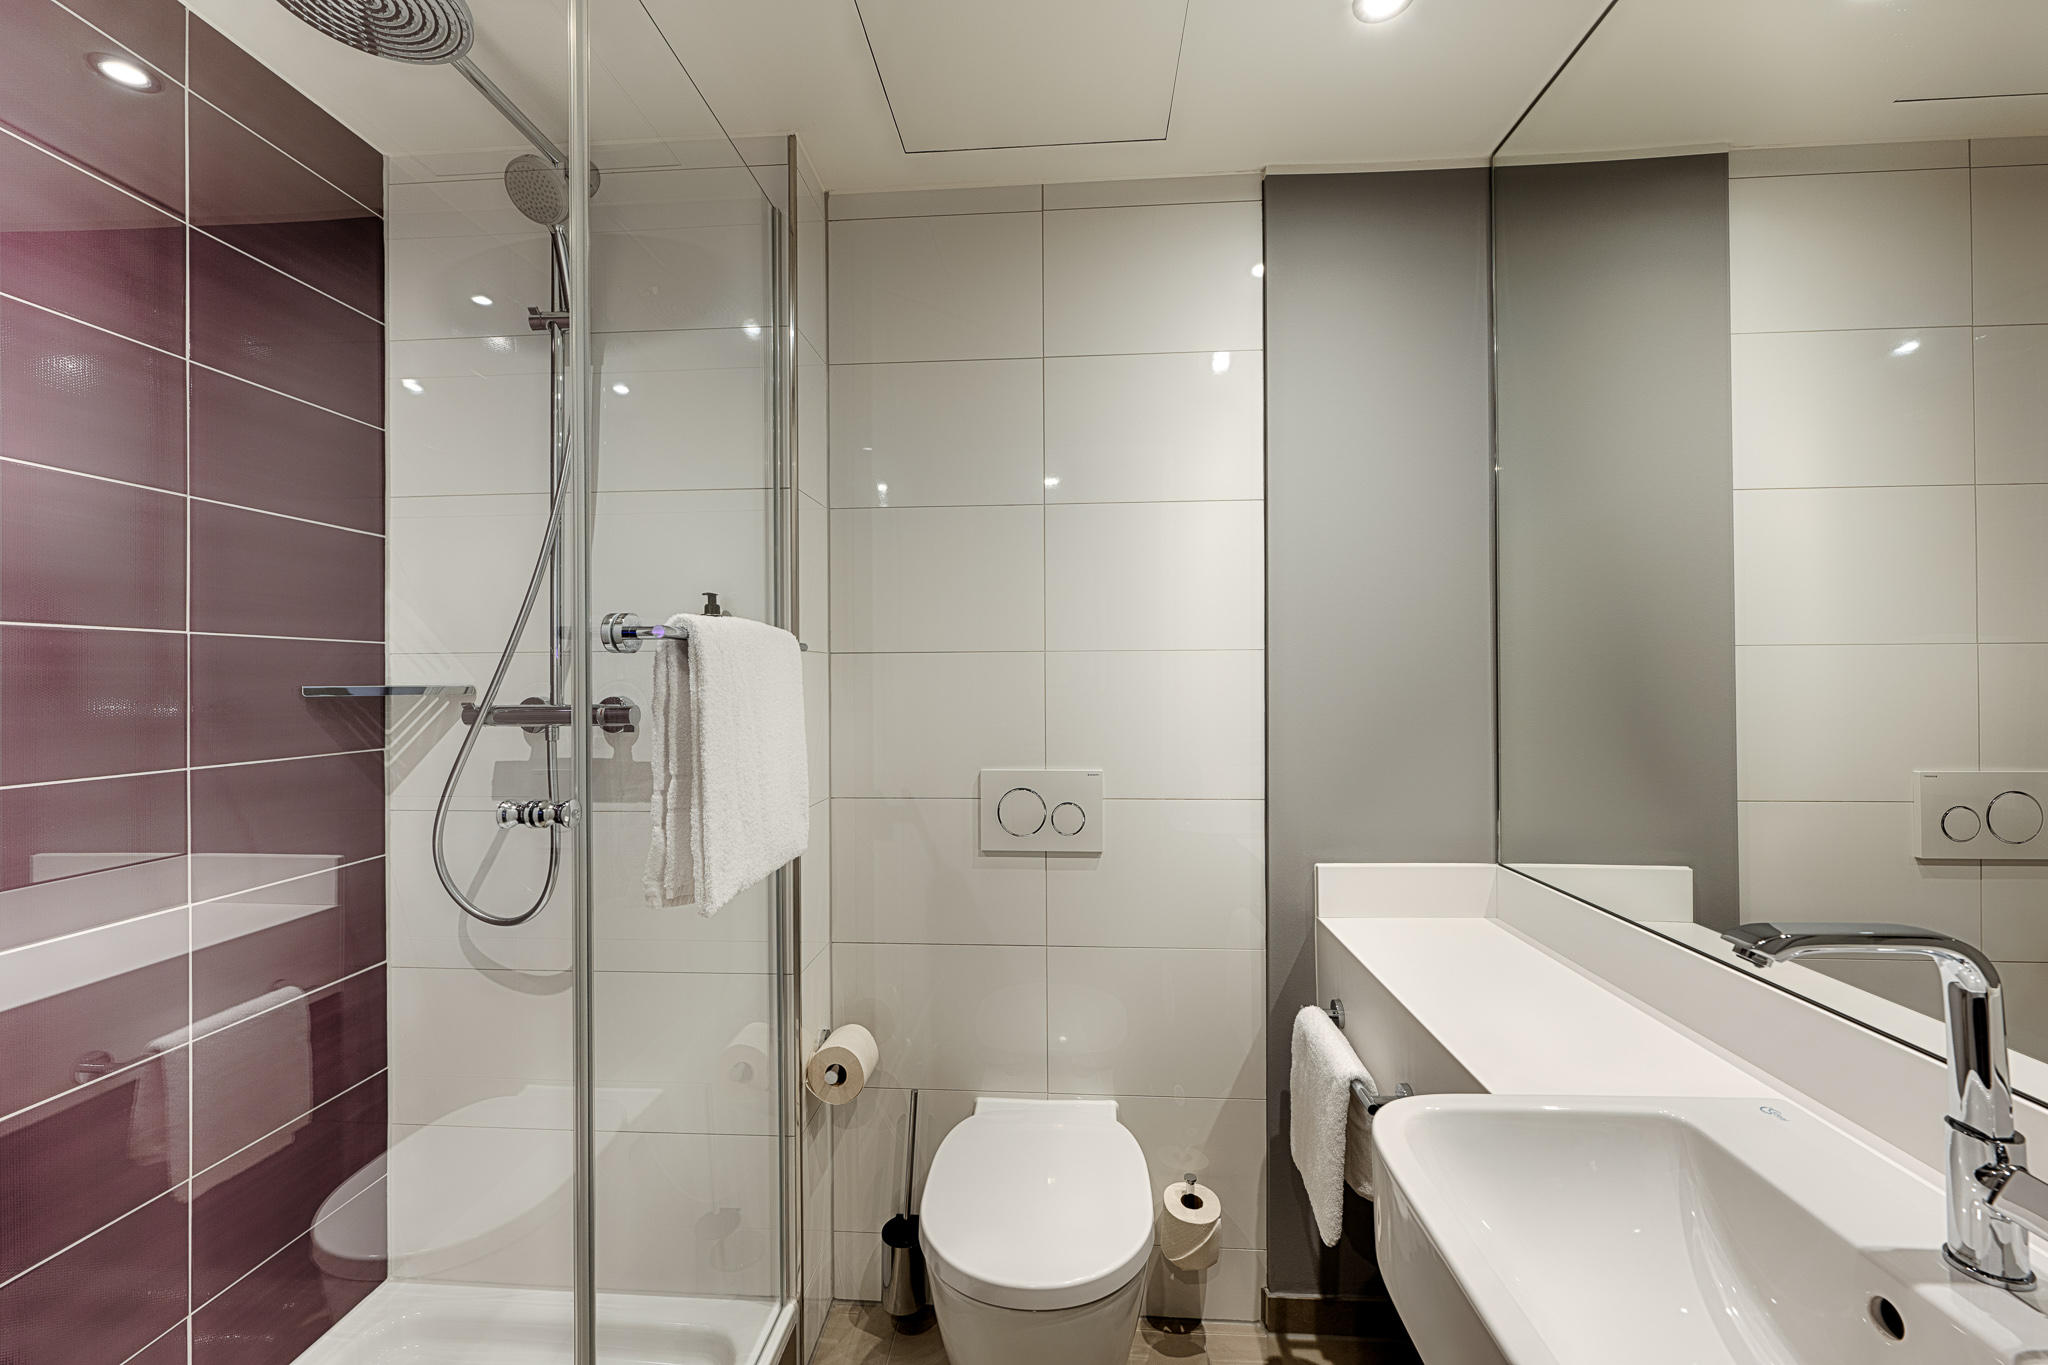 Premier Inn Hamburg City Klostertor hotel bathroom with shower